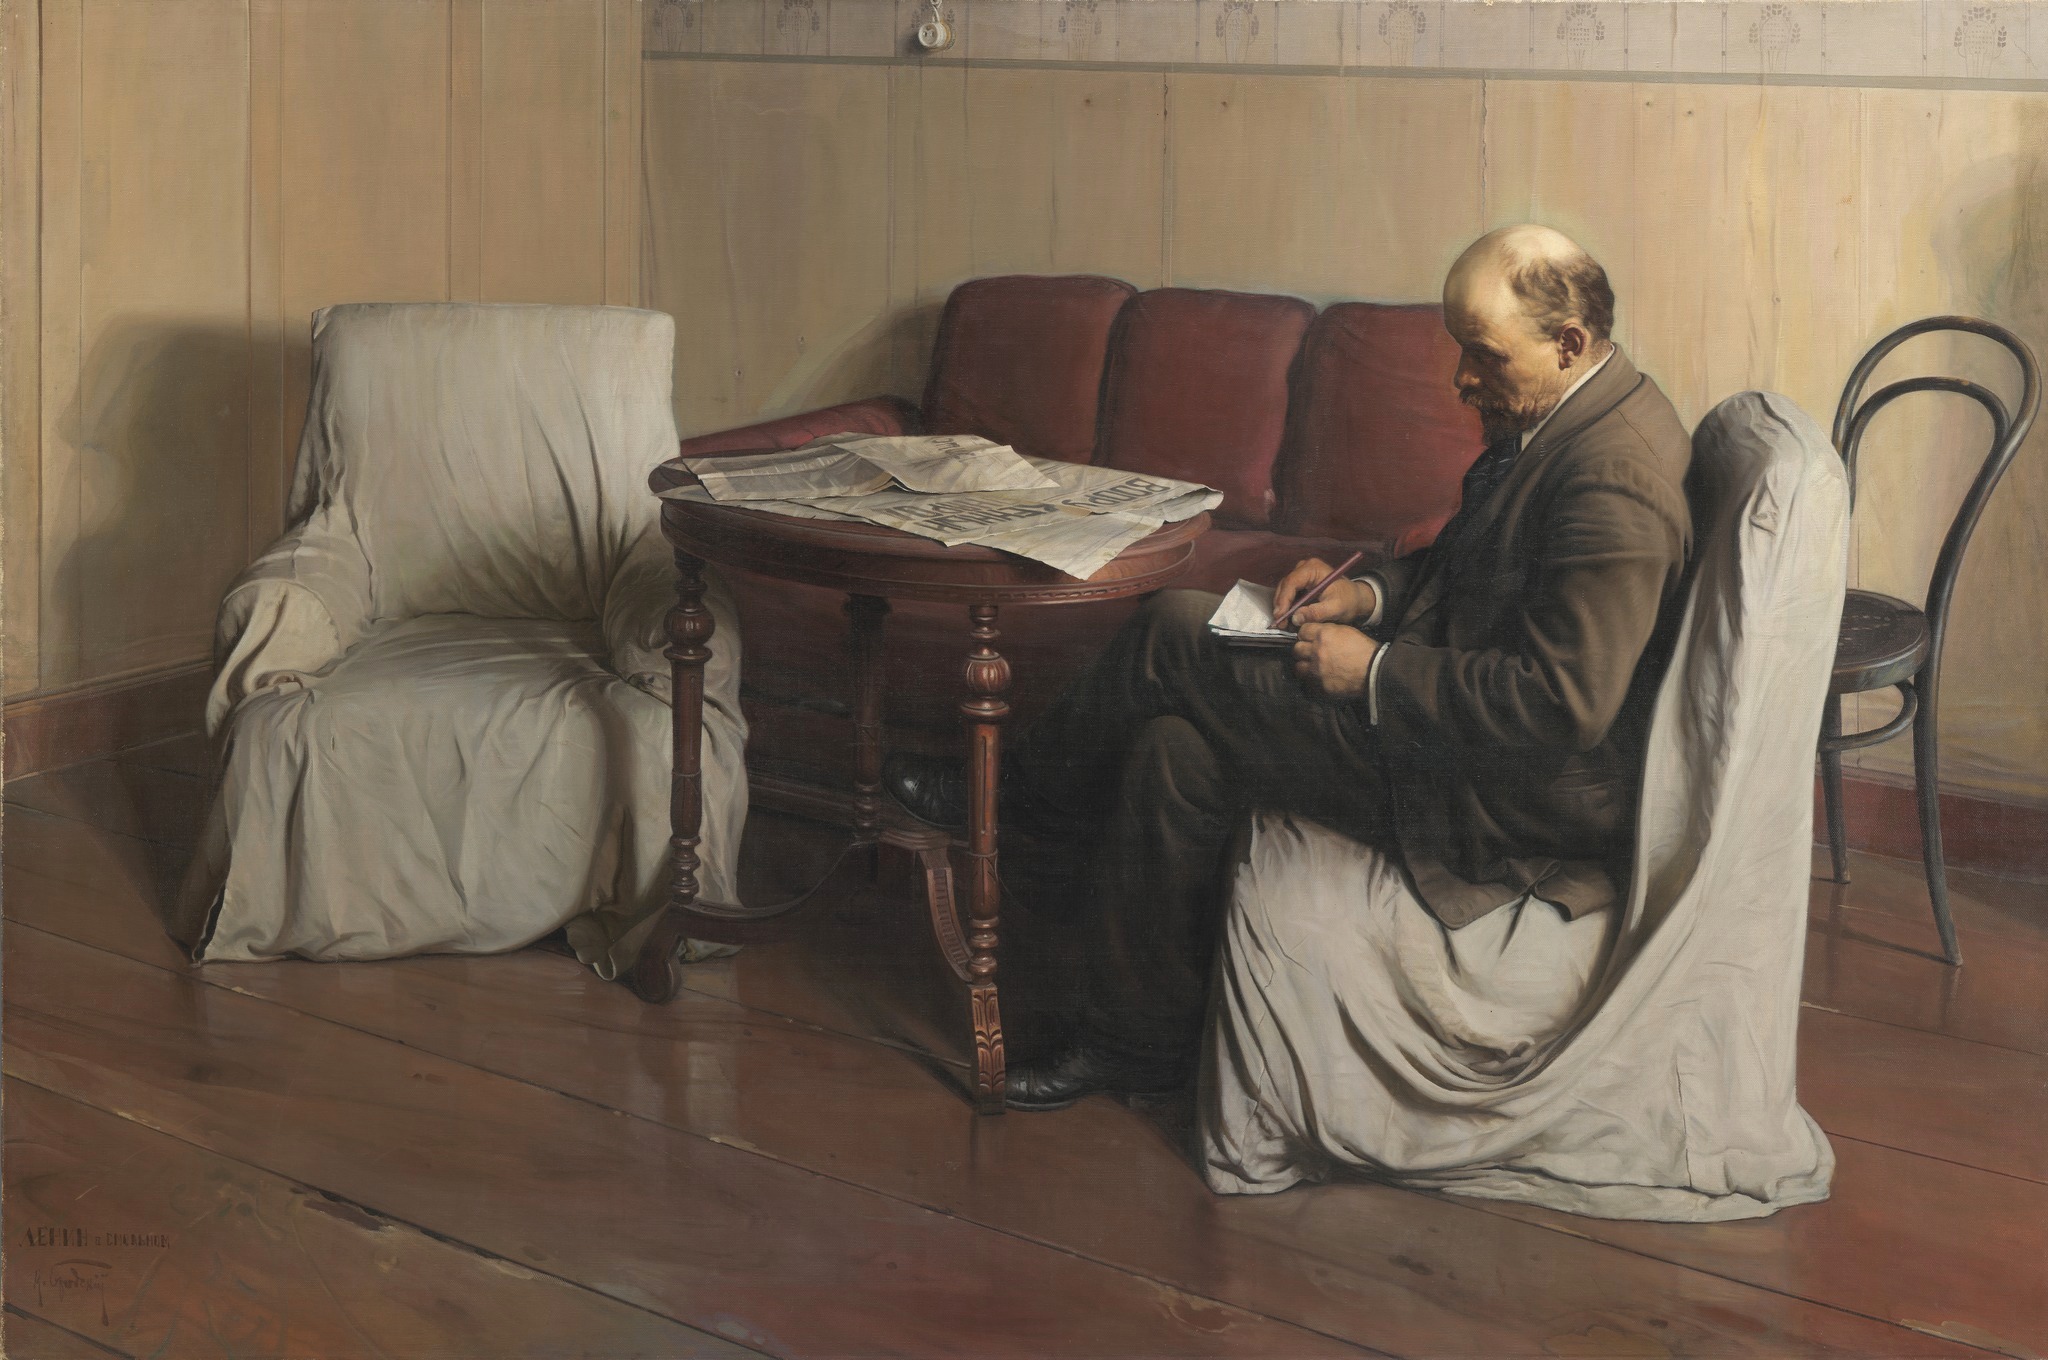 Isaak Brodsky, Wladimir Lenin in Smolny im Jahr 1917, 1930, Öl auf Leinwand, 190 x 287 cm, Tretjakow-Galerie, Moskau